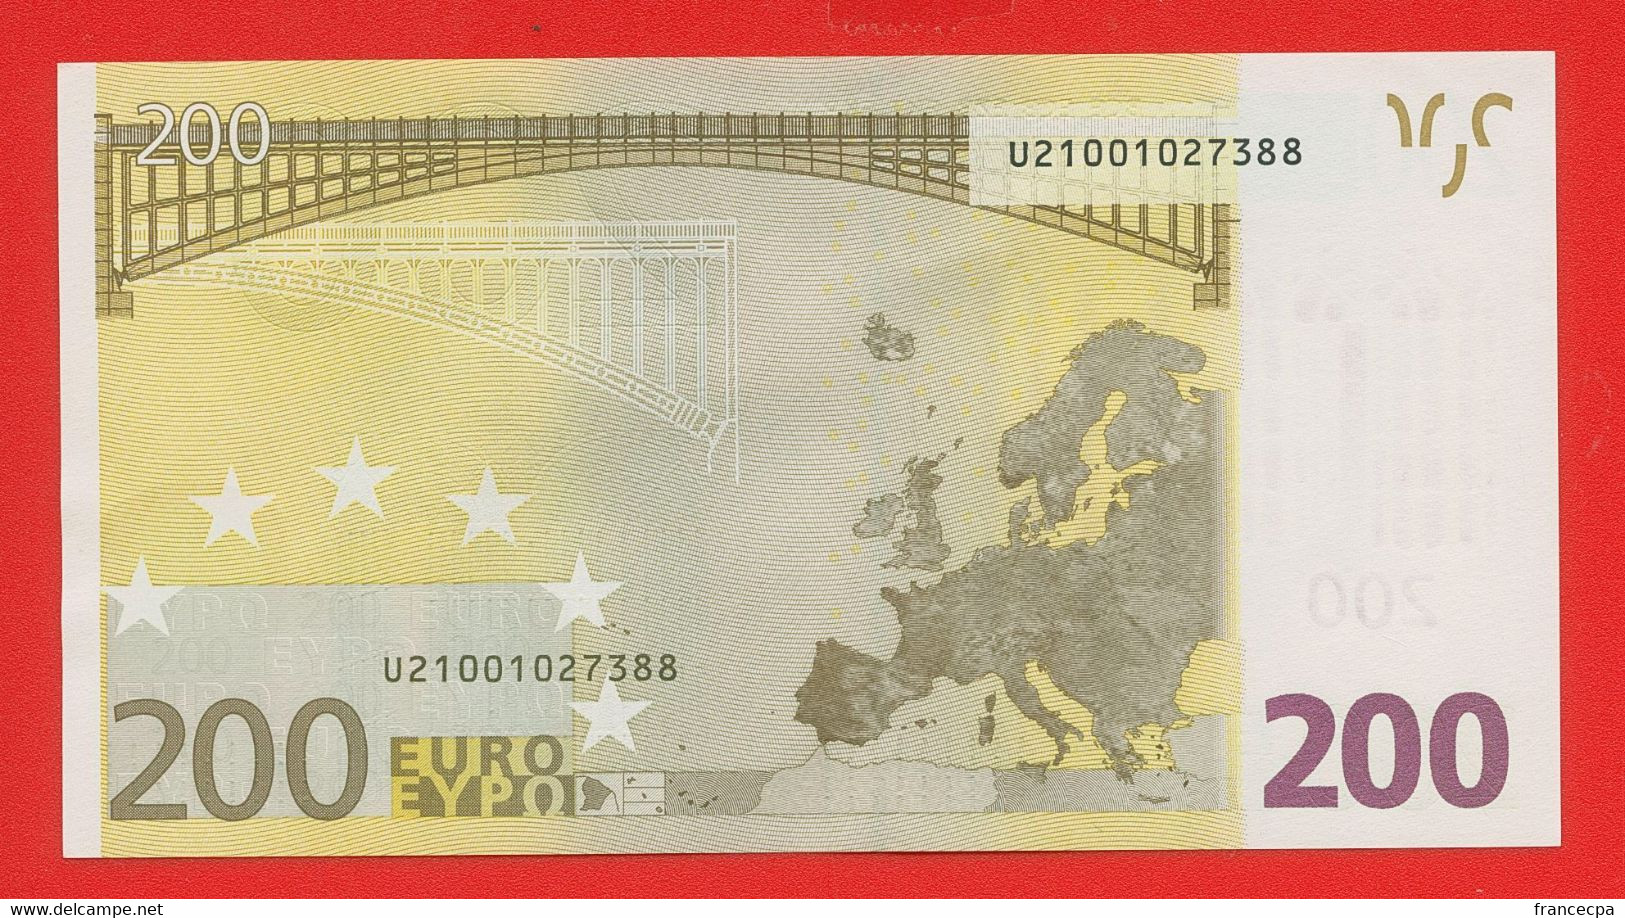 01 - BILLET 200 EURO 2002 NEUF Wim Duisenberg N° U21001027388 - Code T001A3 - Provenance Banque De France Jamais Circulé - 200 Euro